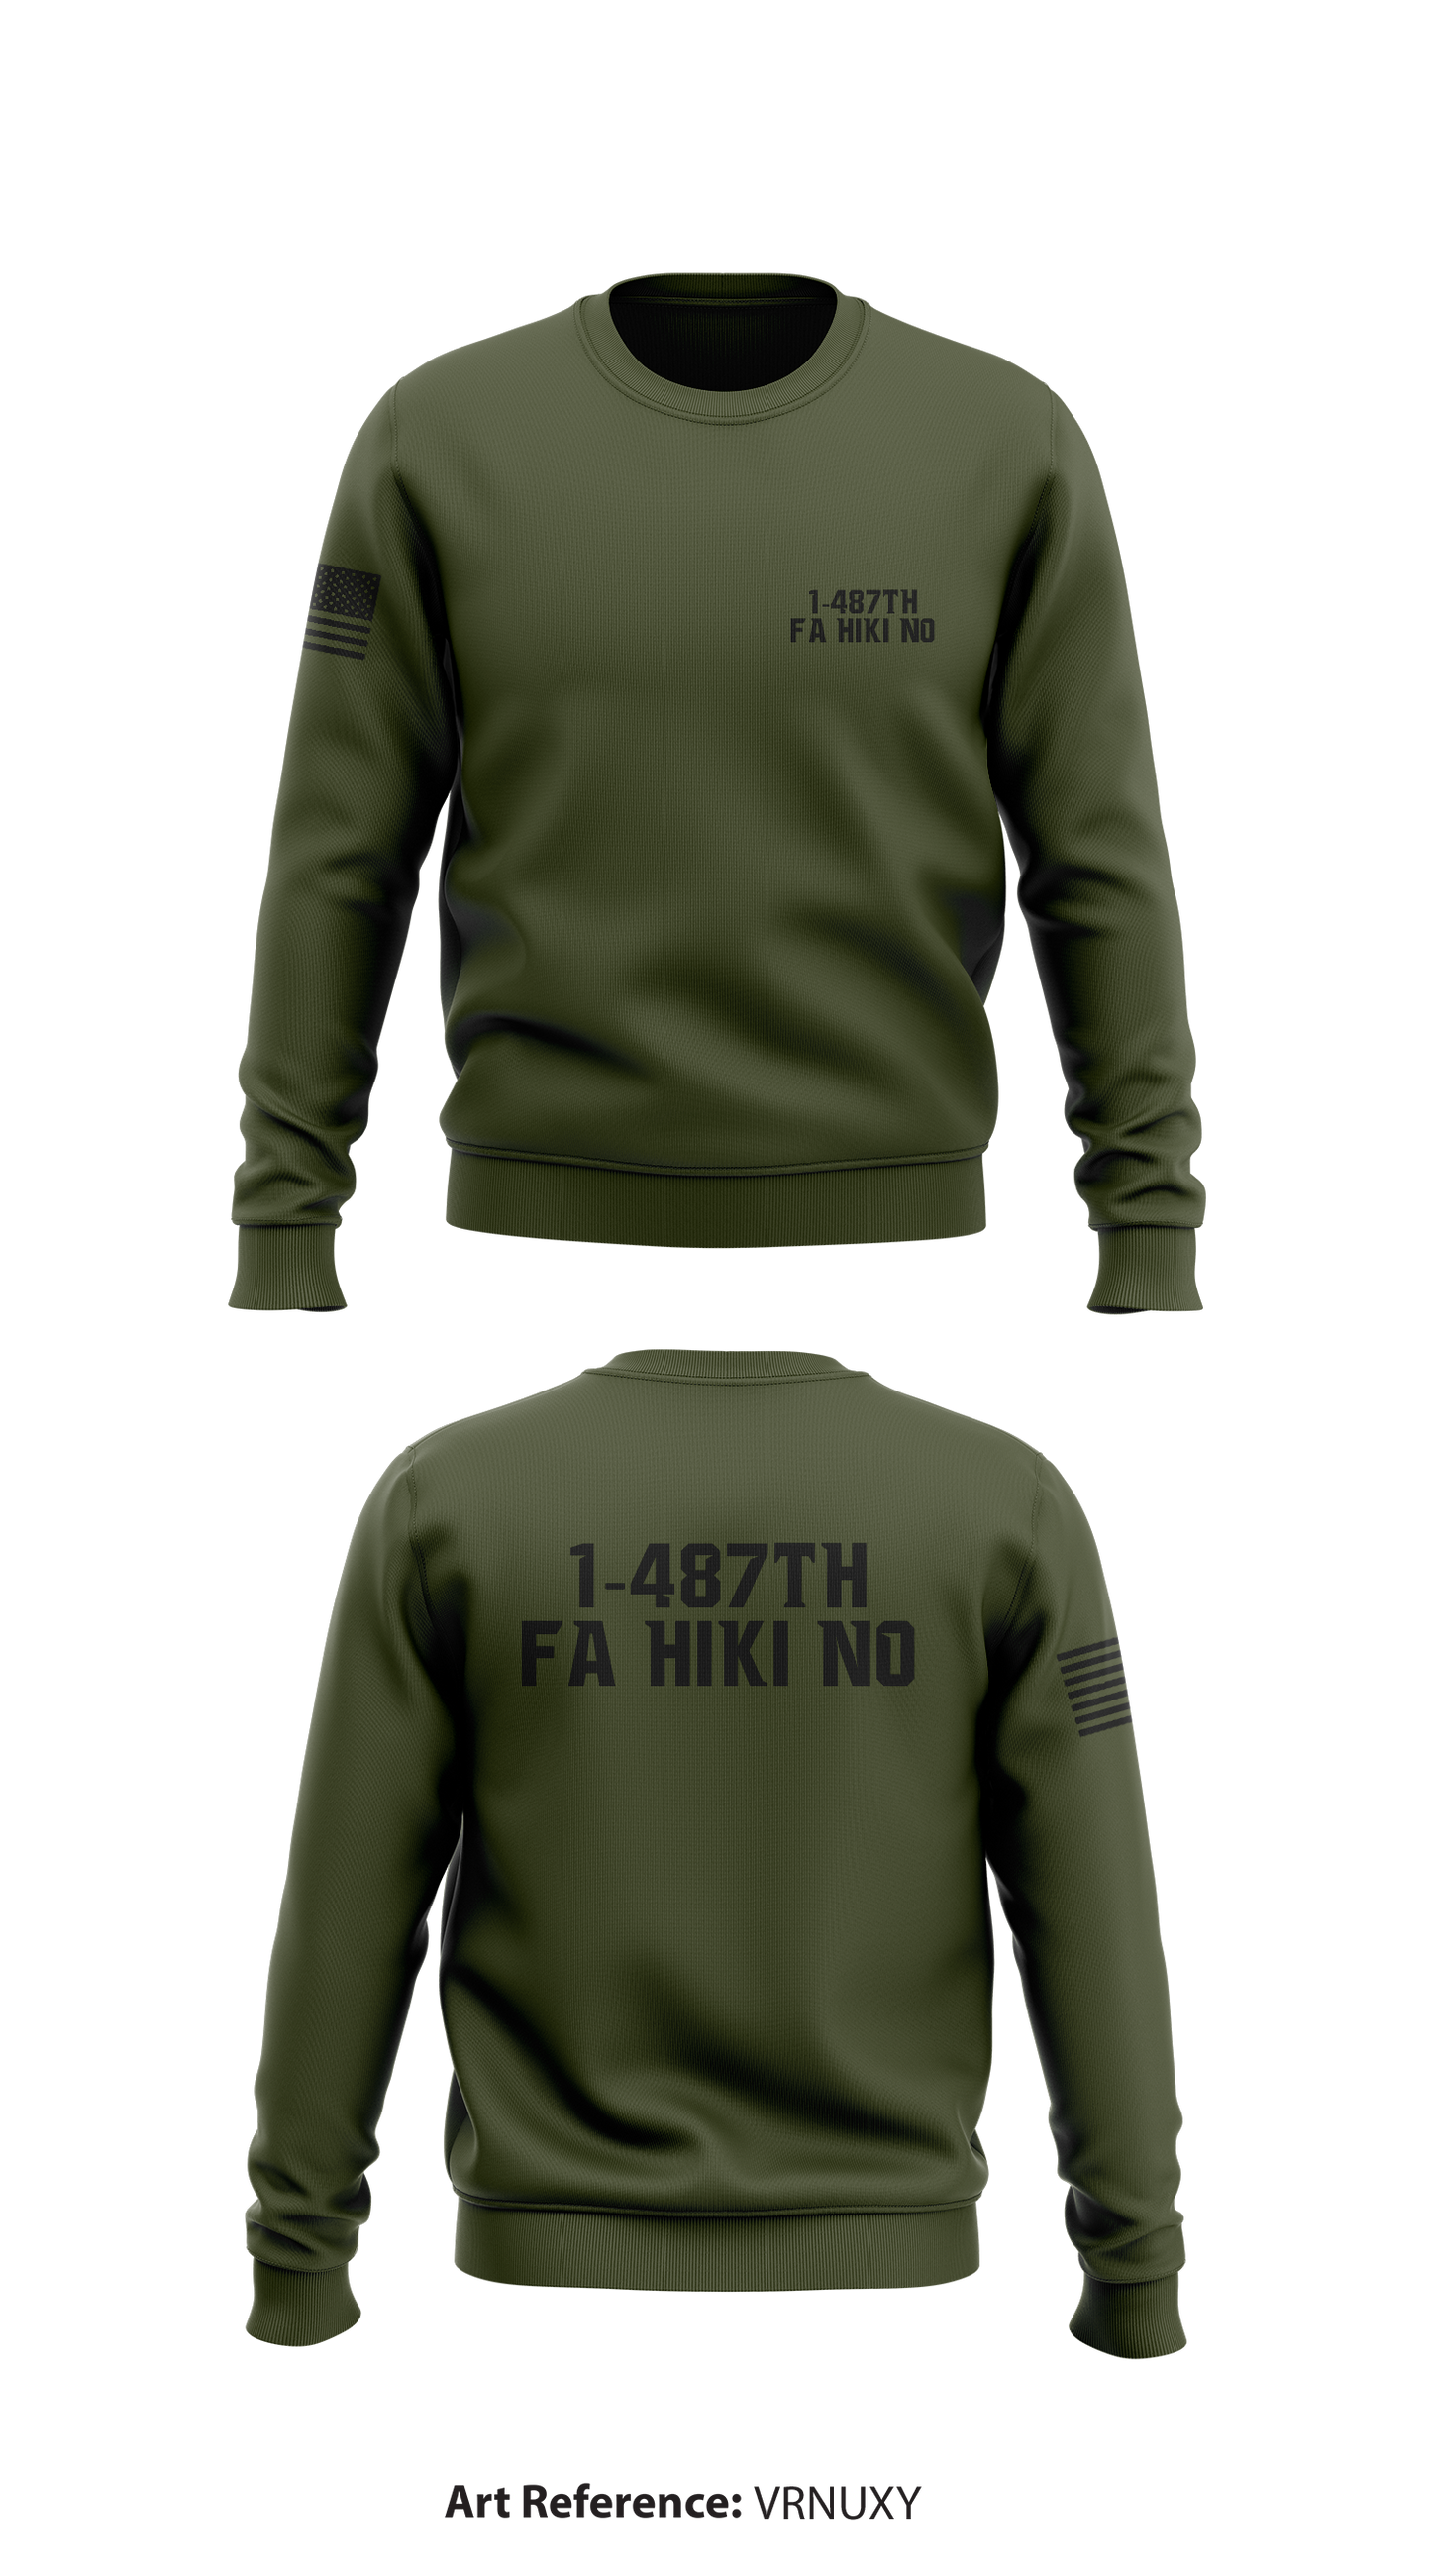 1-487th FA HIKI NO Store 1 Core Men's Crewneck Performance Sweatshirt - vrnUxy